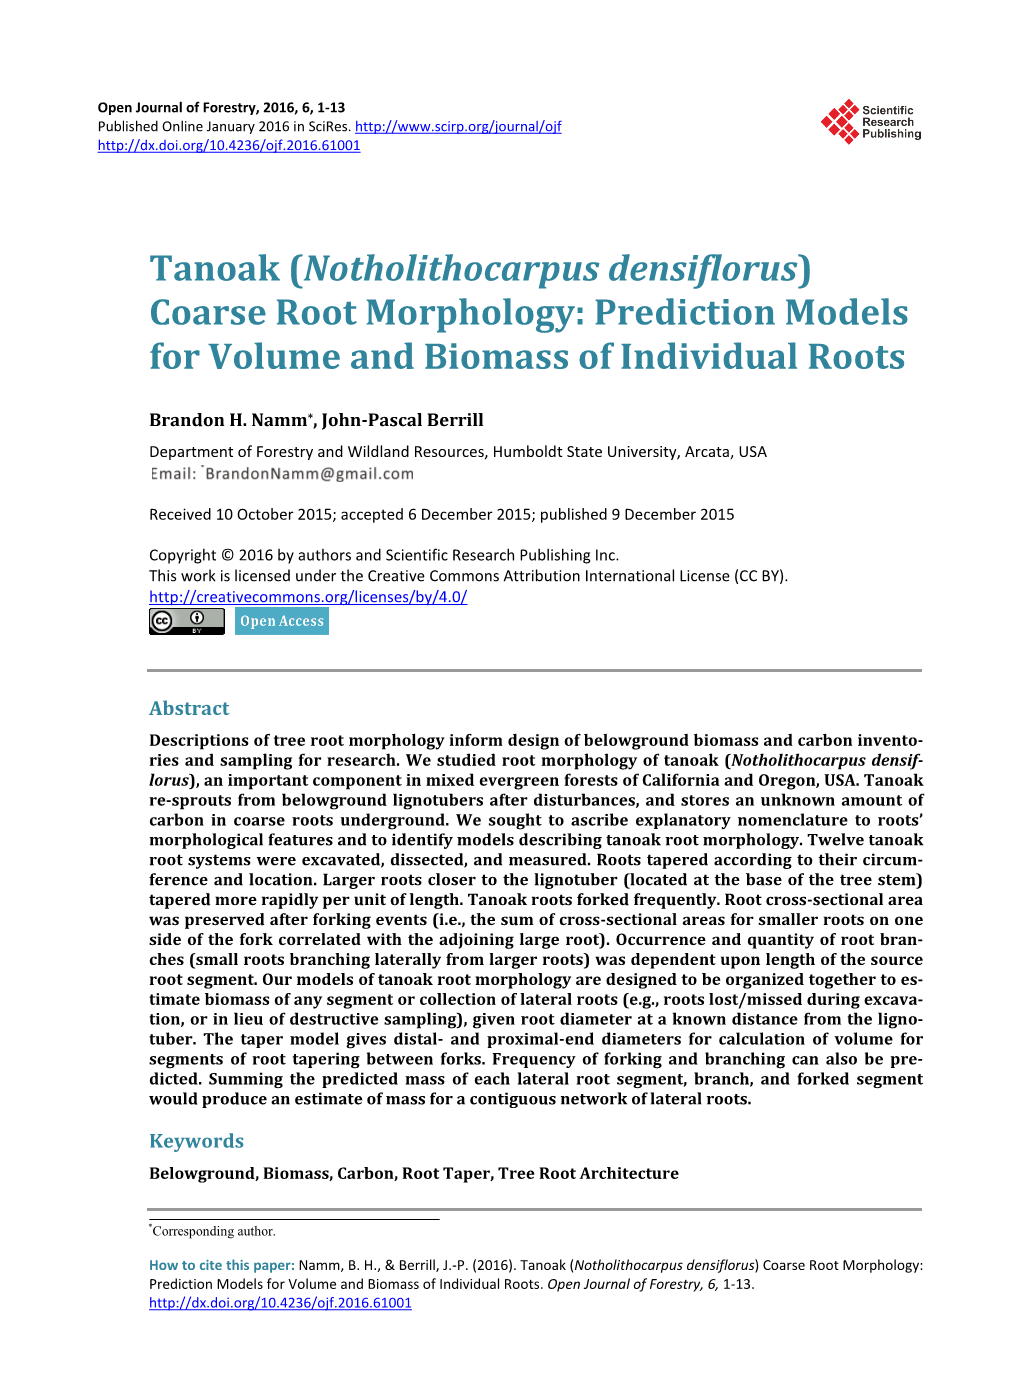 Tanoak (Notholithocarpus Densiflorus) Coarse Root Morphology: Prediction Models for Volume and Biomass of Individual Roots